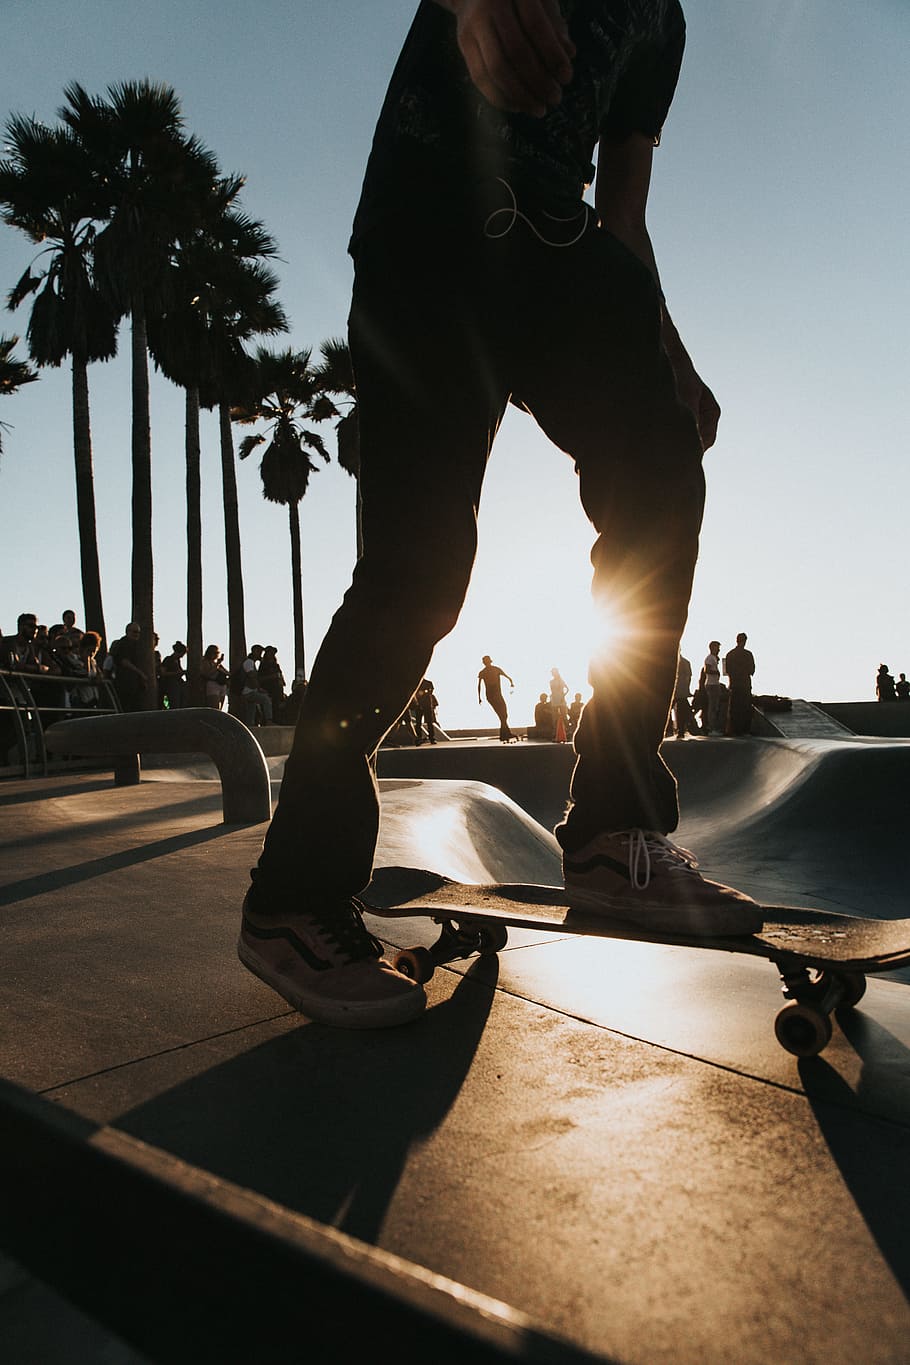 Skateboarding Wallpapers  Top 35 Best Skateboarding Backgrounds Download